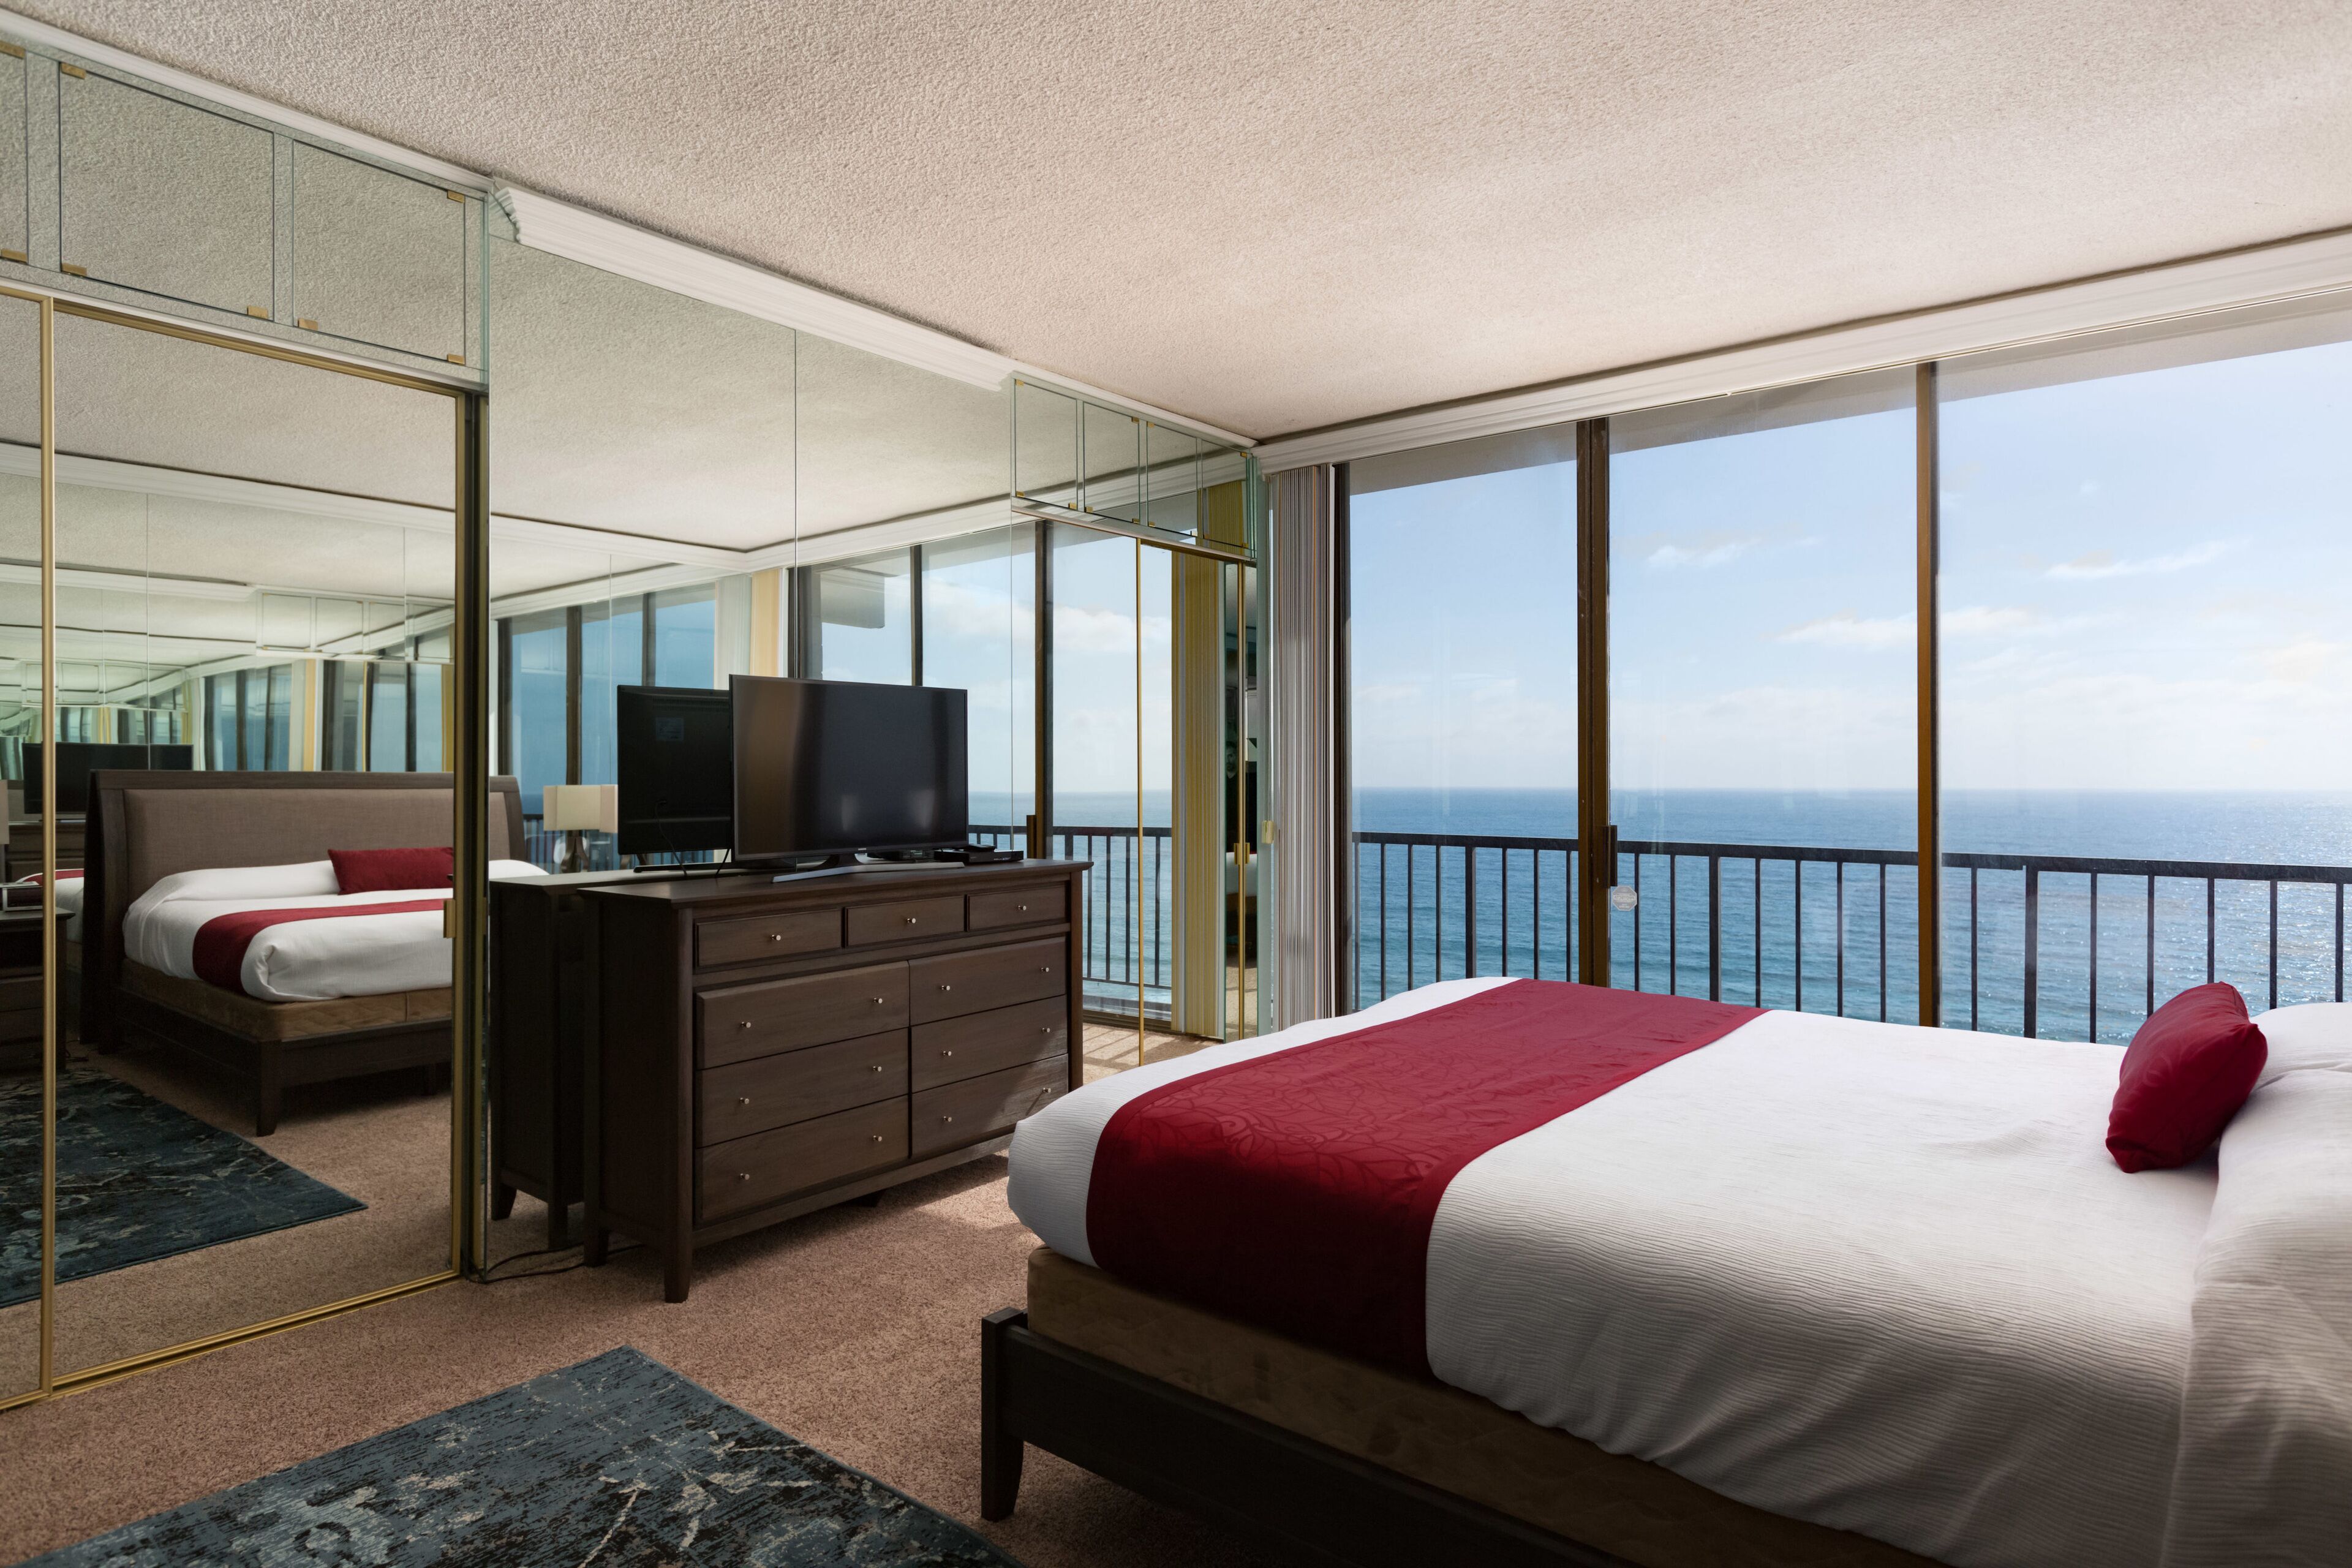 Capri by the Sea by All Seasons Resort Lodging